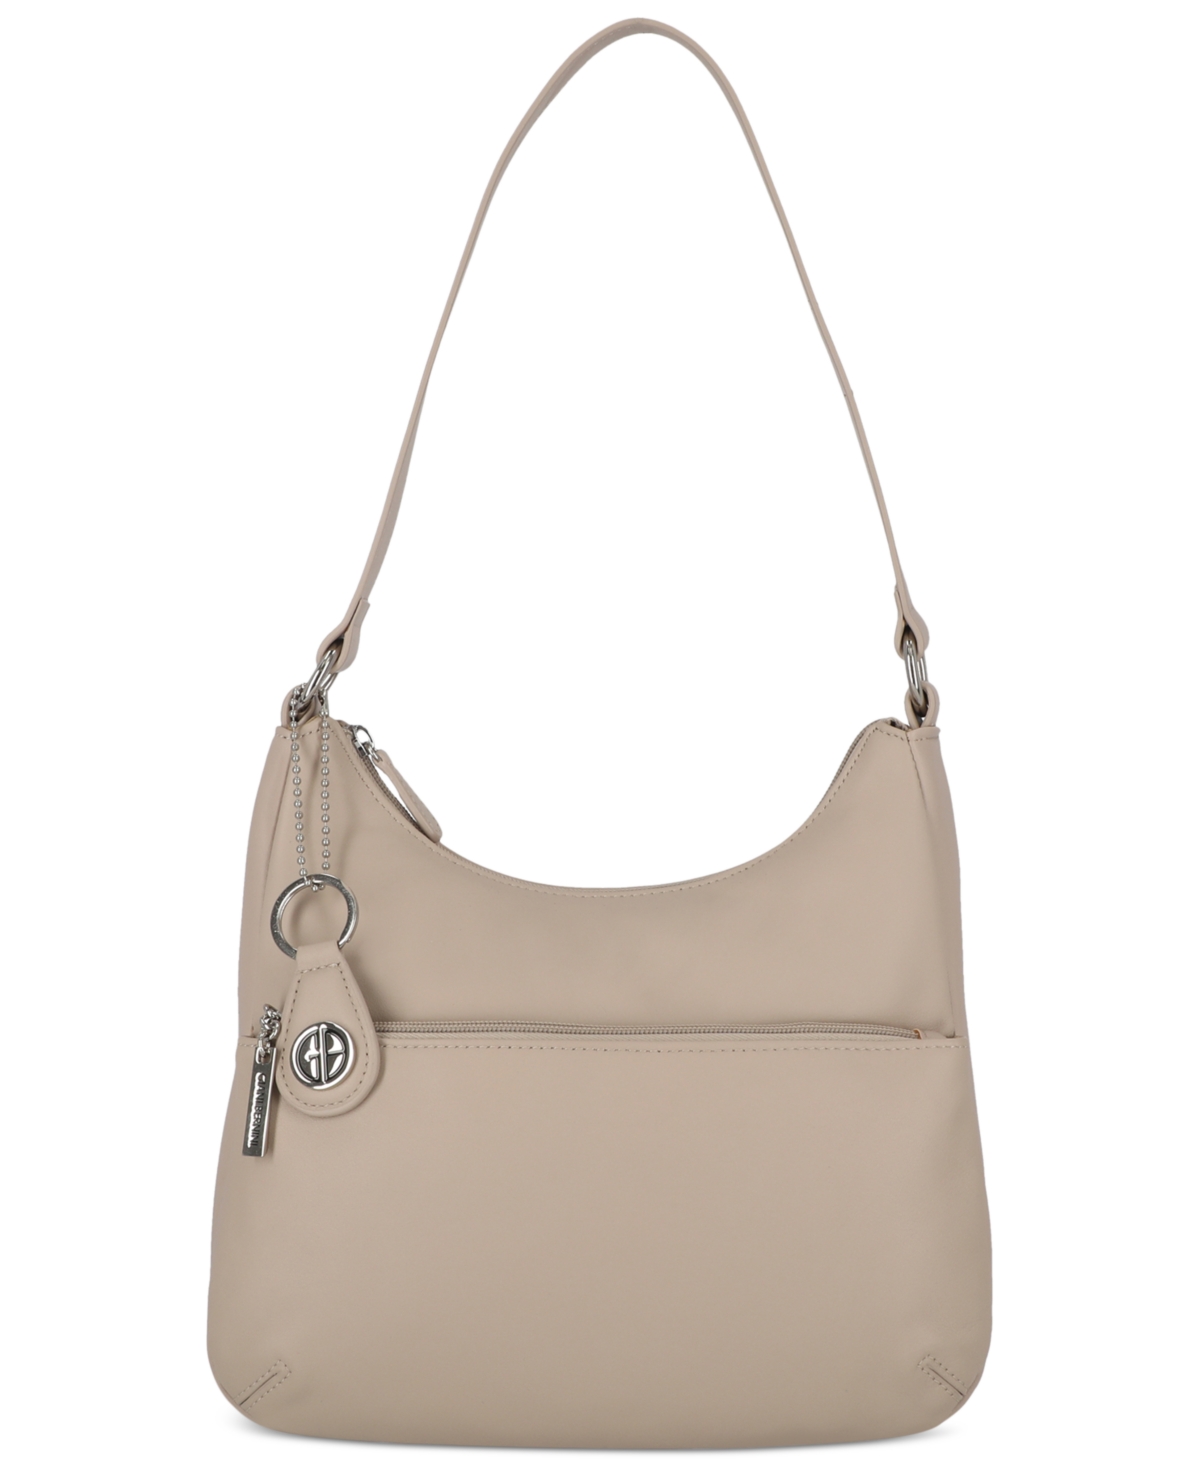 Nappa Leather Hobo Bag, Created for Macy's - Flax